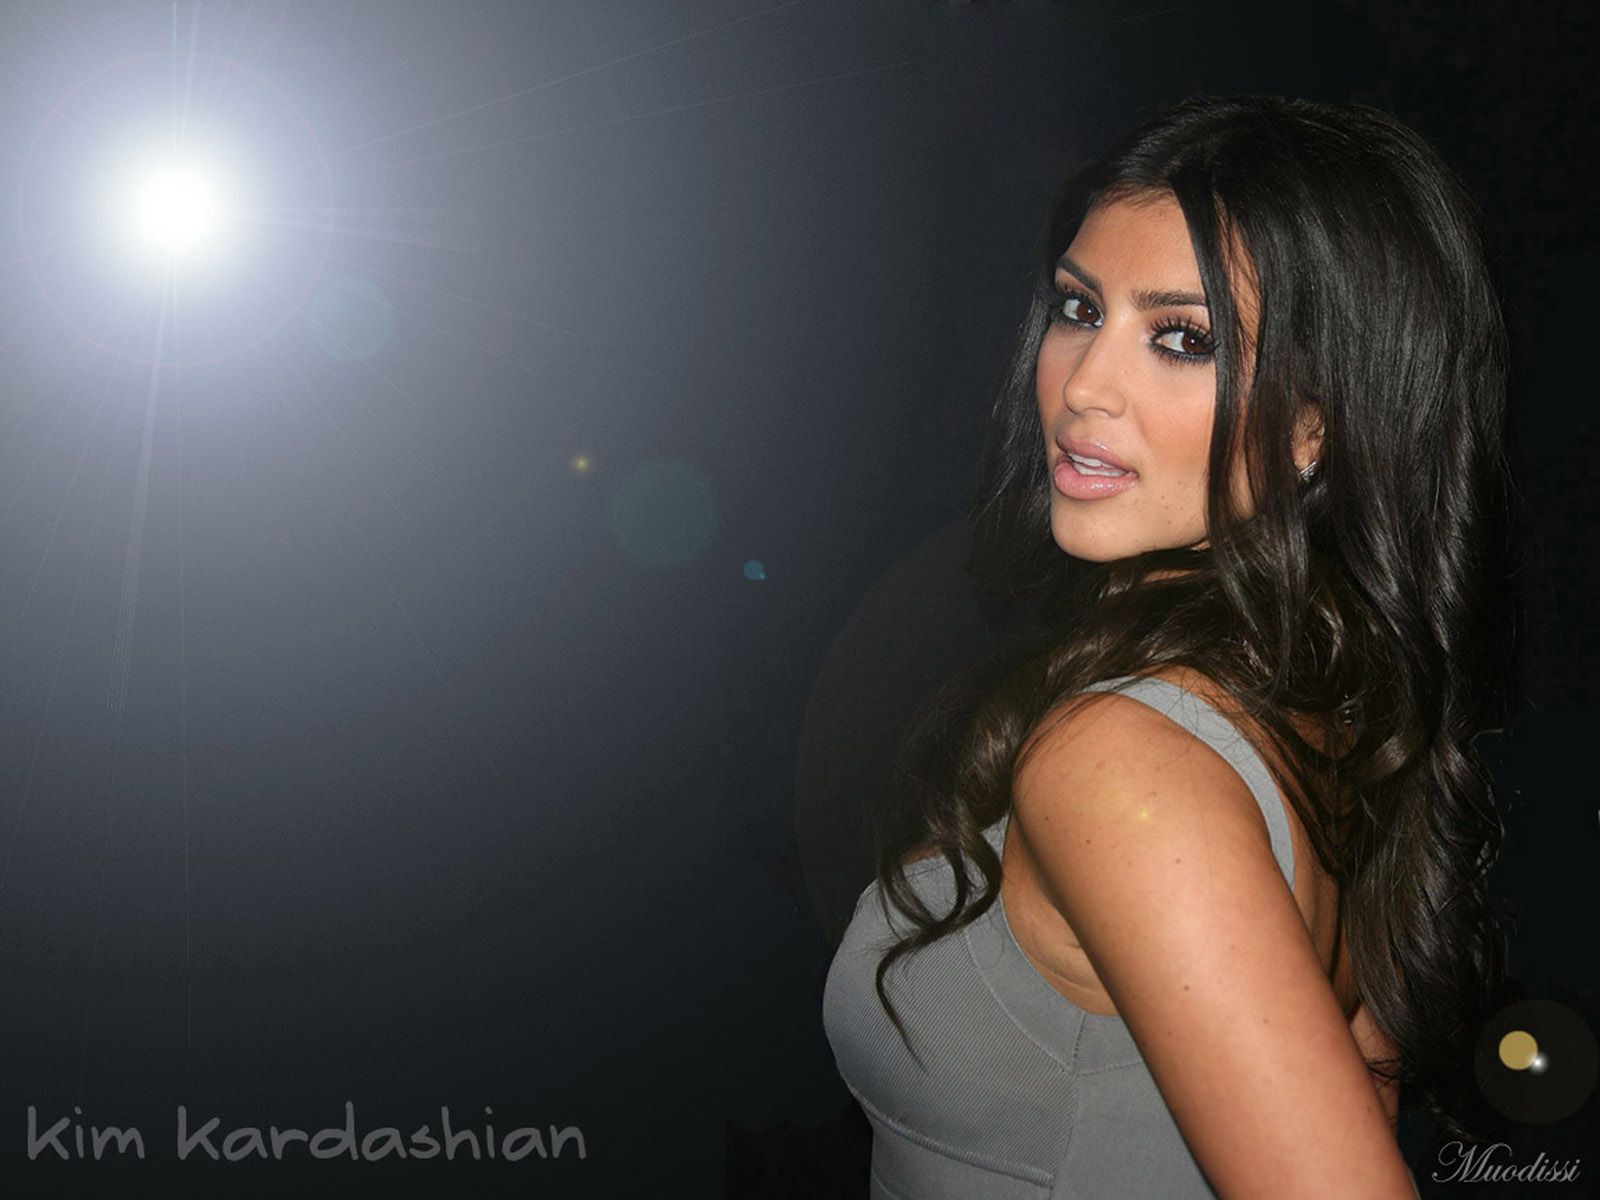 Stock Free Image: kim kardashian. kim kardashian pregnant. kim